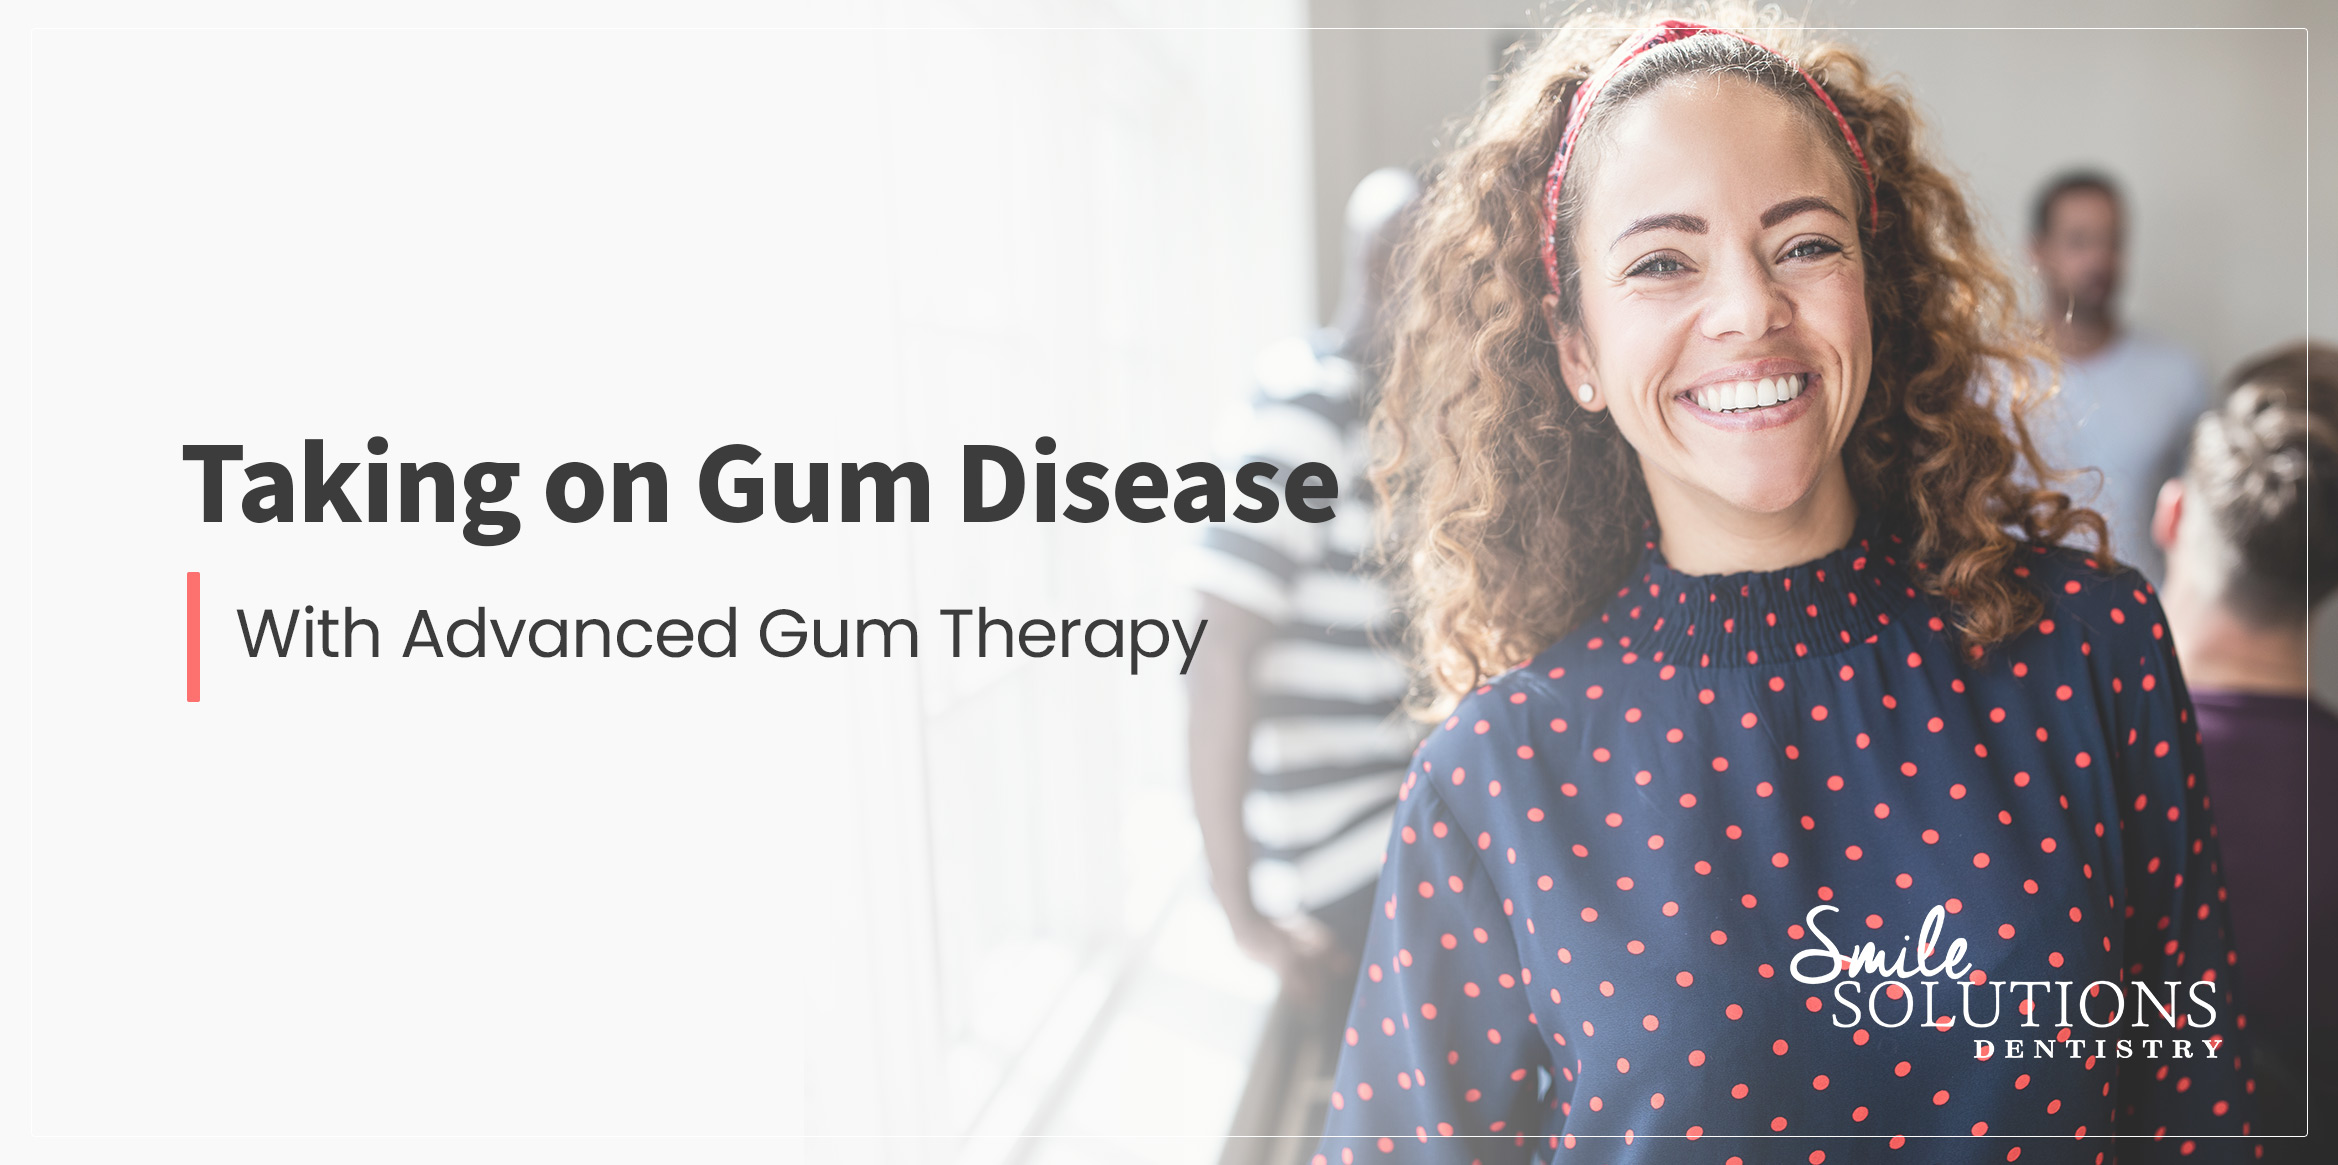 Advance Gum Therapy